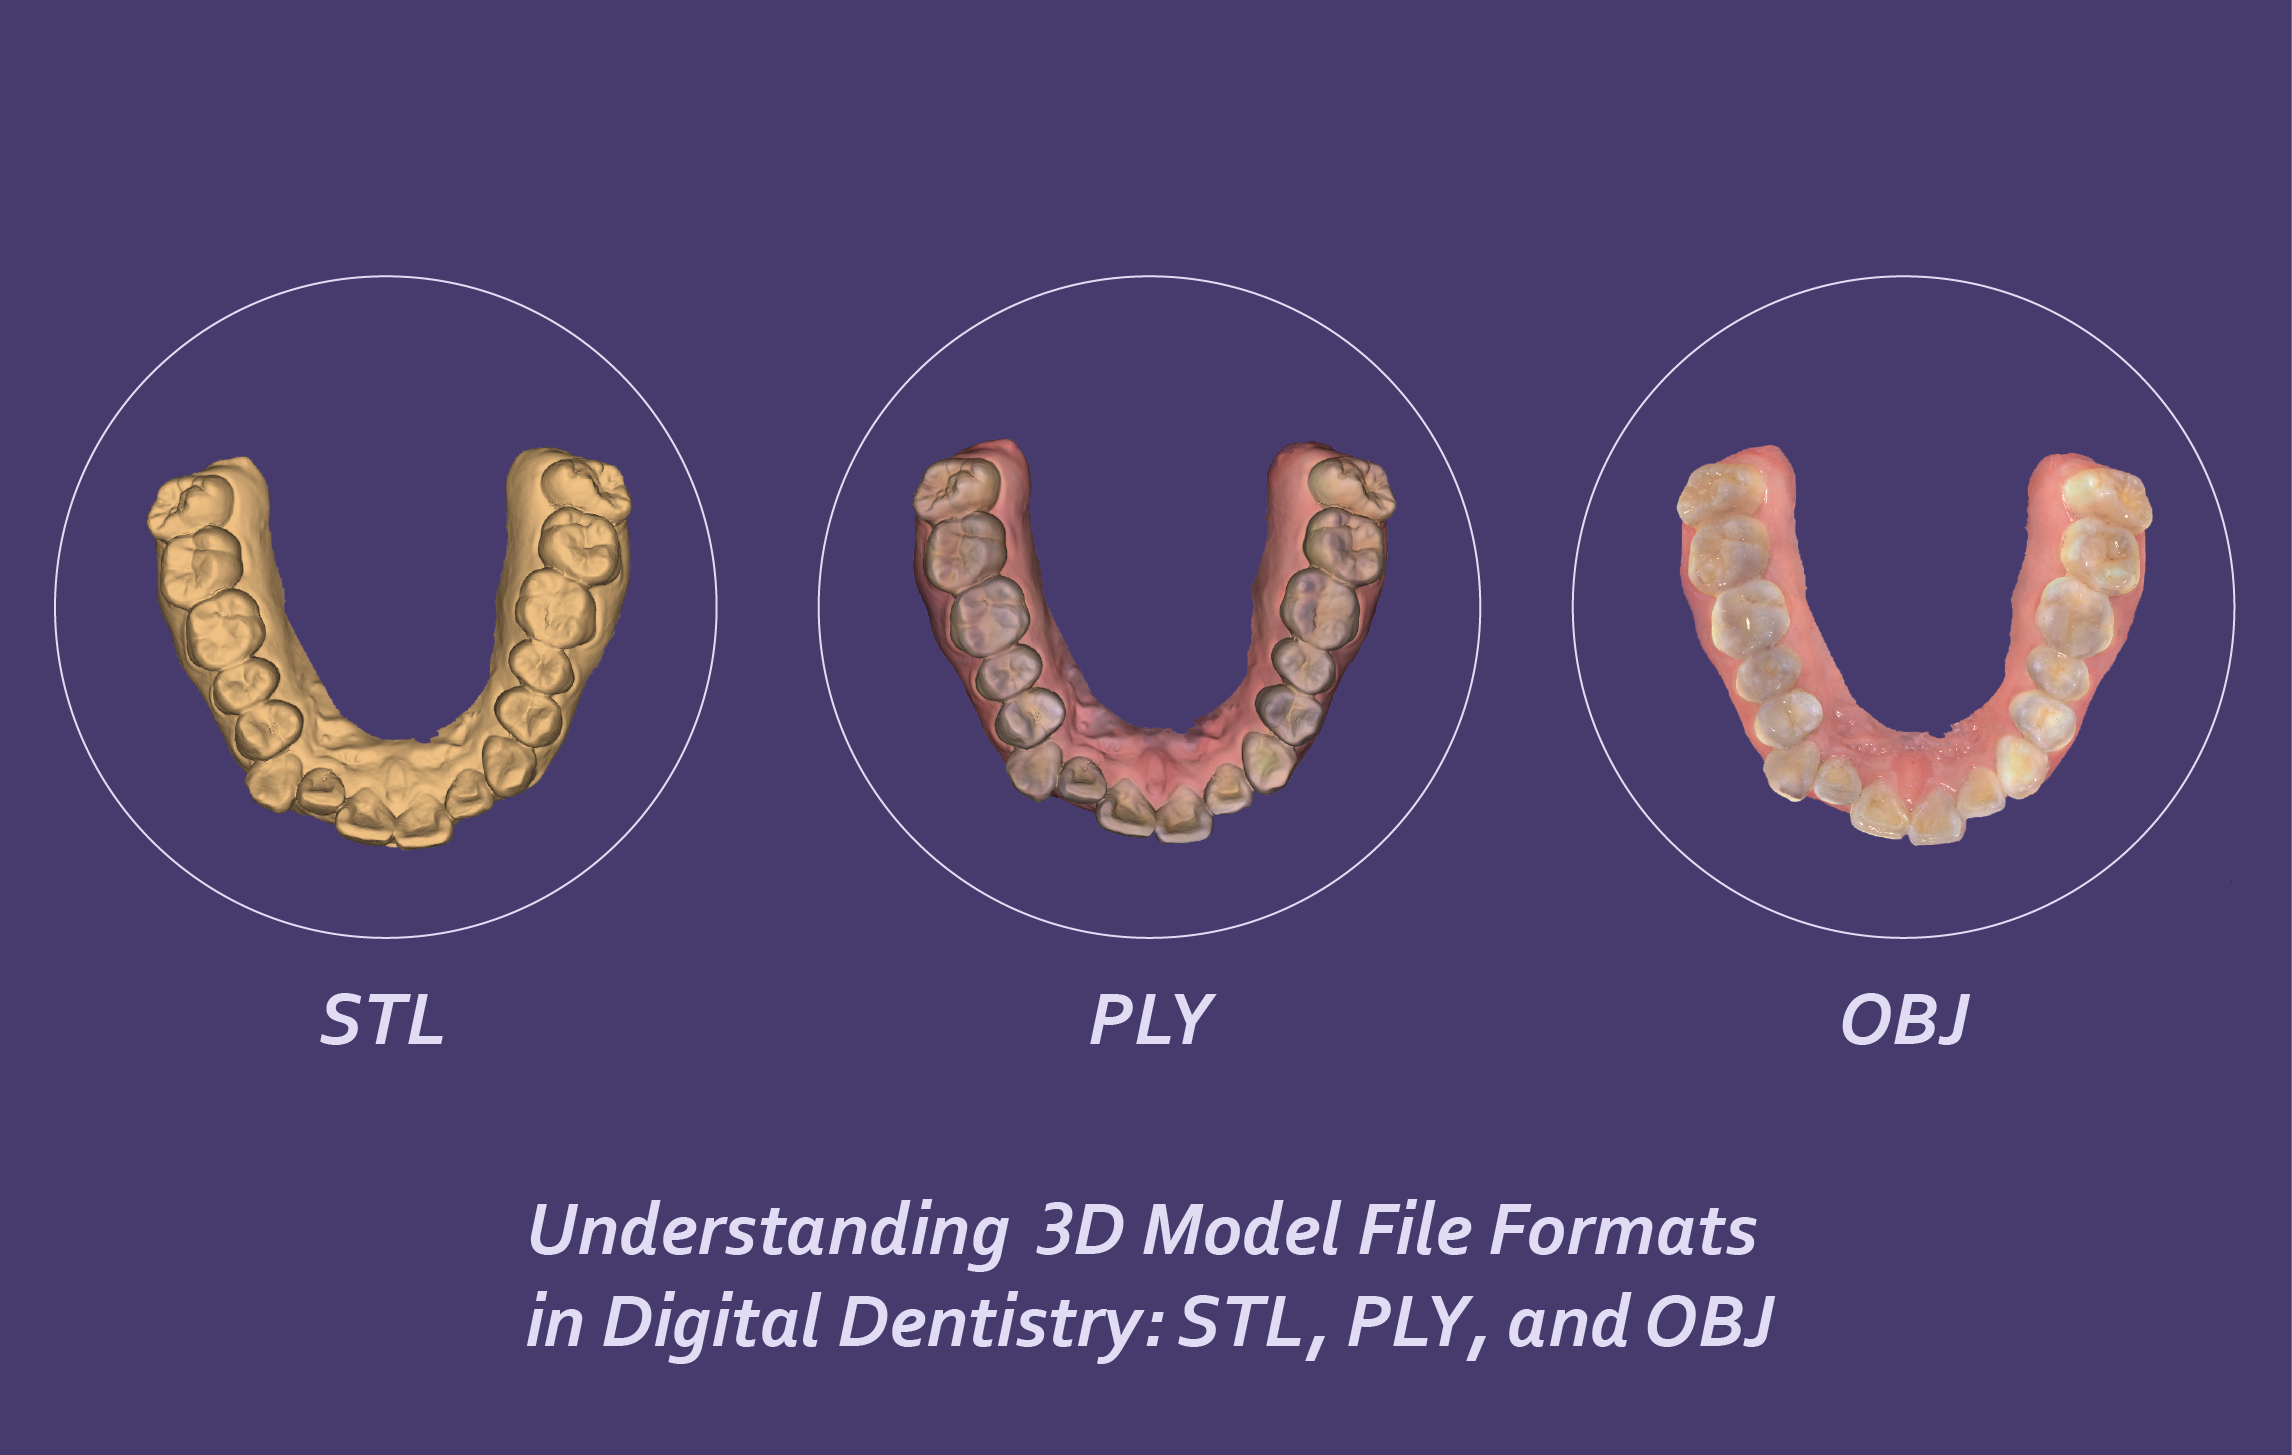 Understanding 3D Model File Formats in Digital Dentistry: STL vs PLY vs OBJ